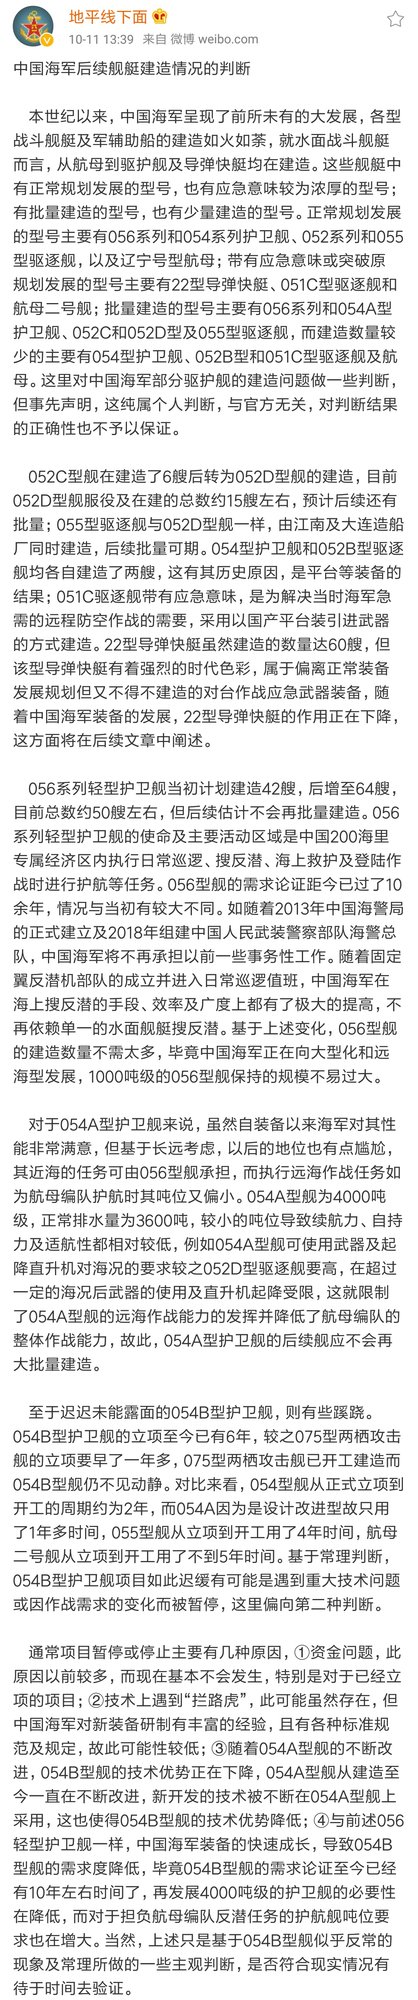 Screenshot_2018-10-11-18-02-03-592_com.sina.weibo.jpg